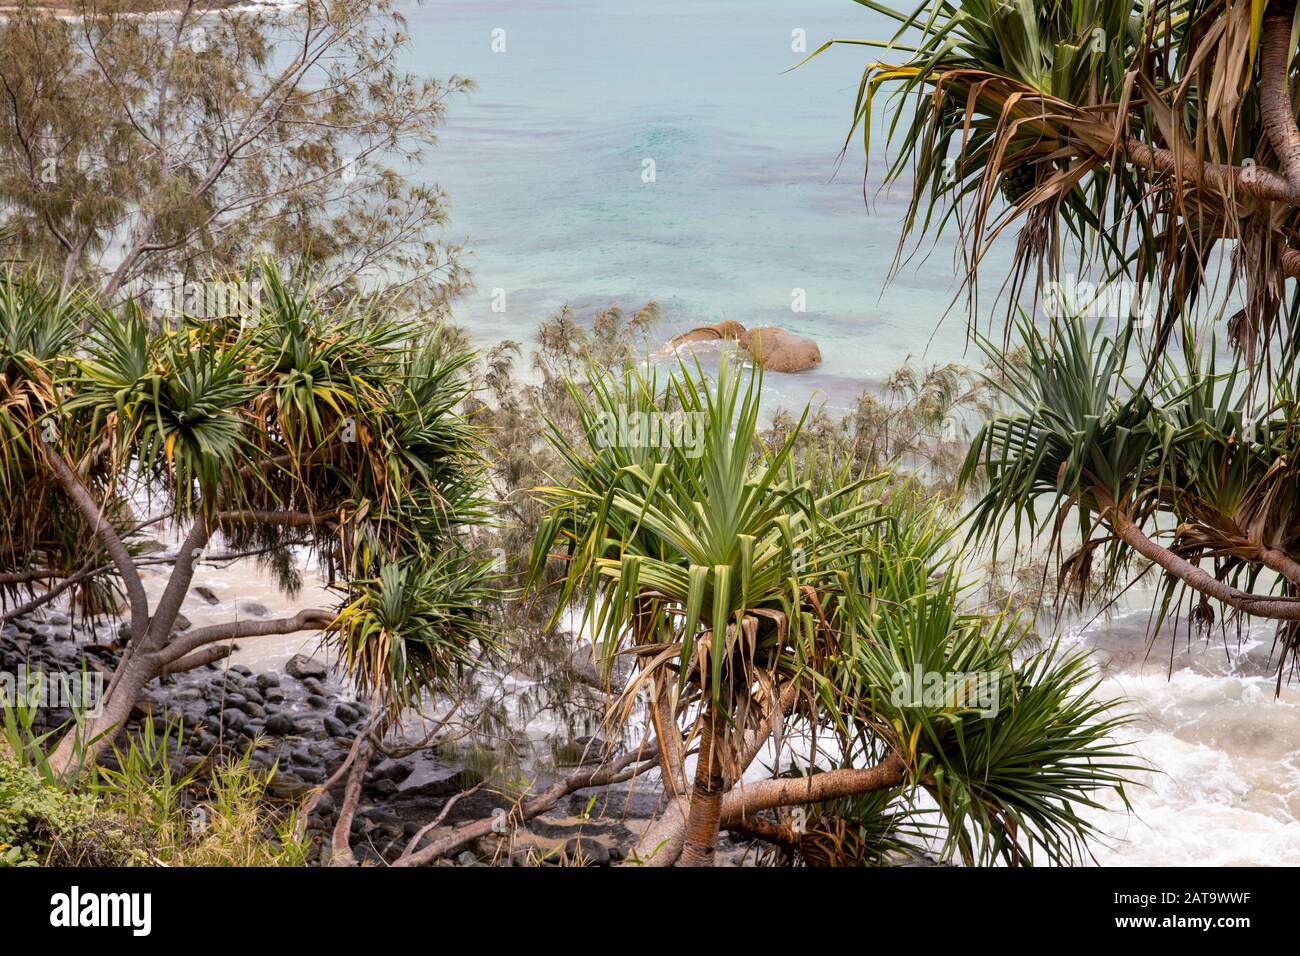 Pandanus rectories or screw pine palm trees beside the ocean at Wategos beach in Byron Bay,New South Wales,Australia Stock Photo